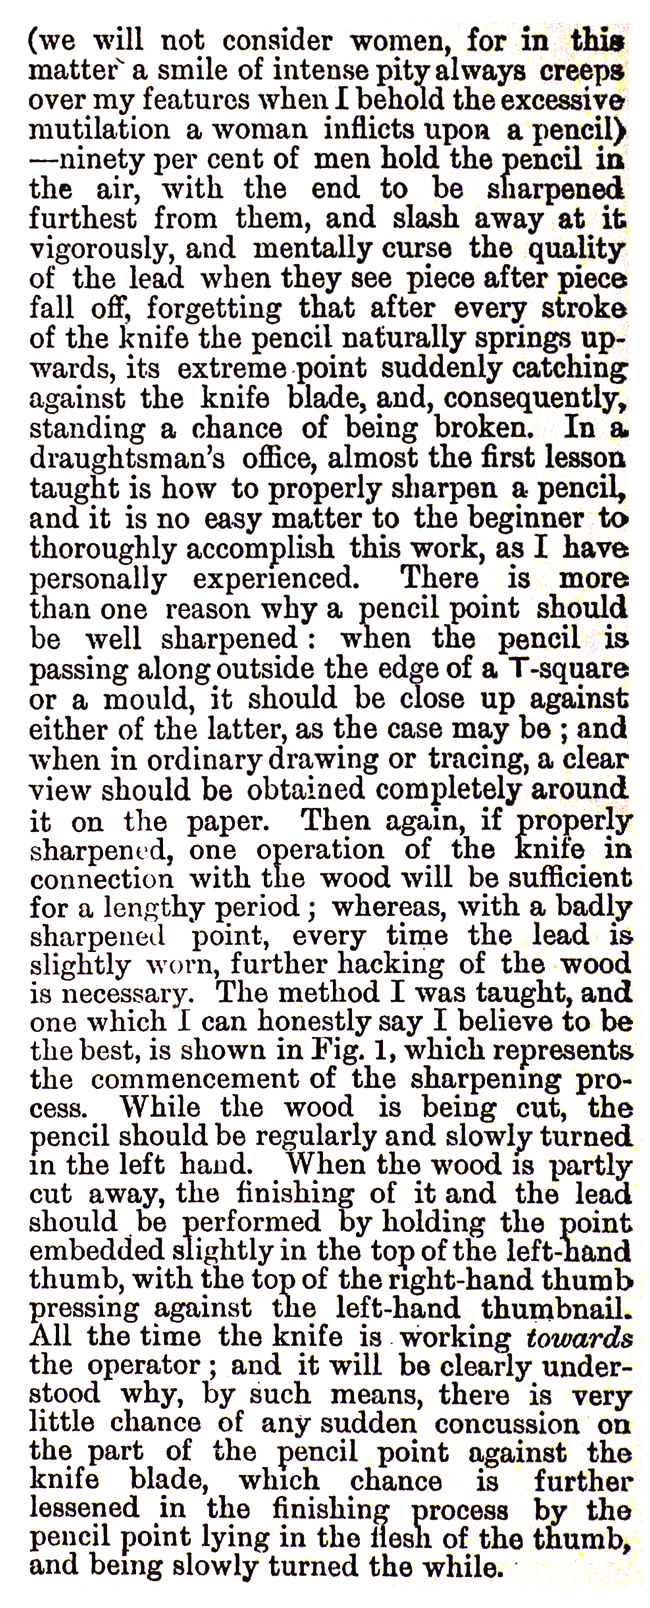 WORK No. 95 - Published January 10, 1891 9